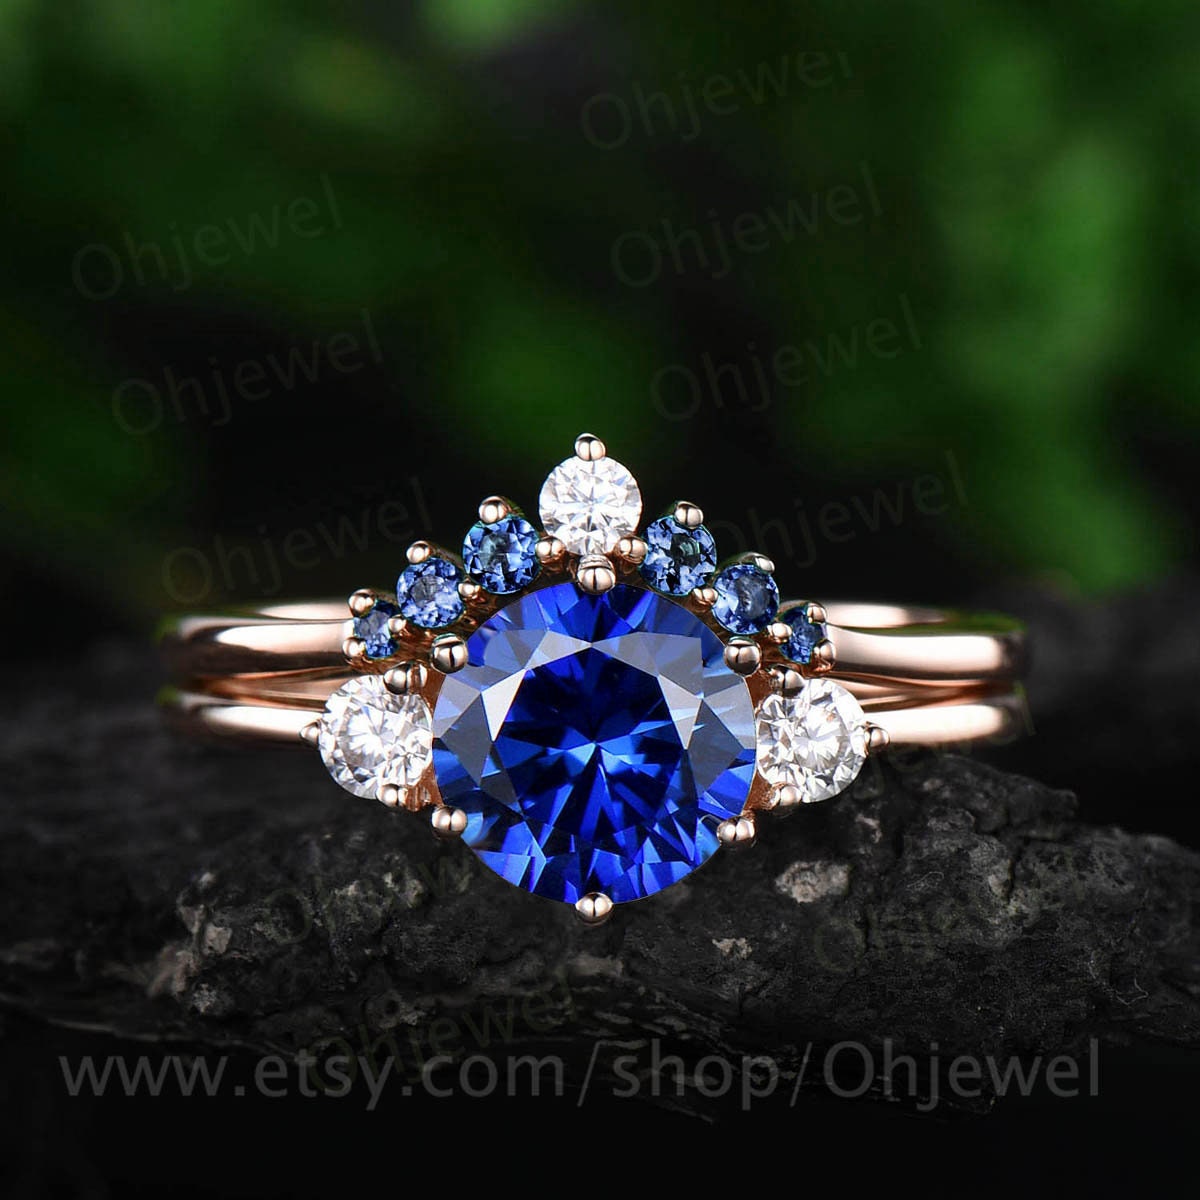 Vintage unique blue sapphire engagement ring set 14k rose gold three stone moissanite ring minimalist bridal wedding ring set for women gift